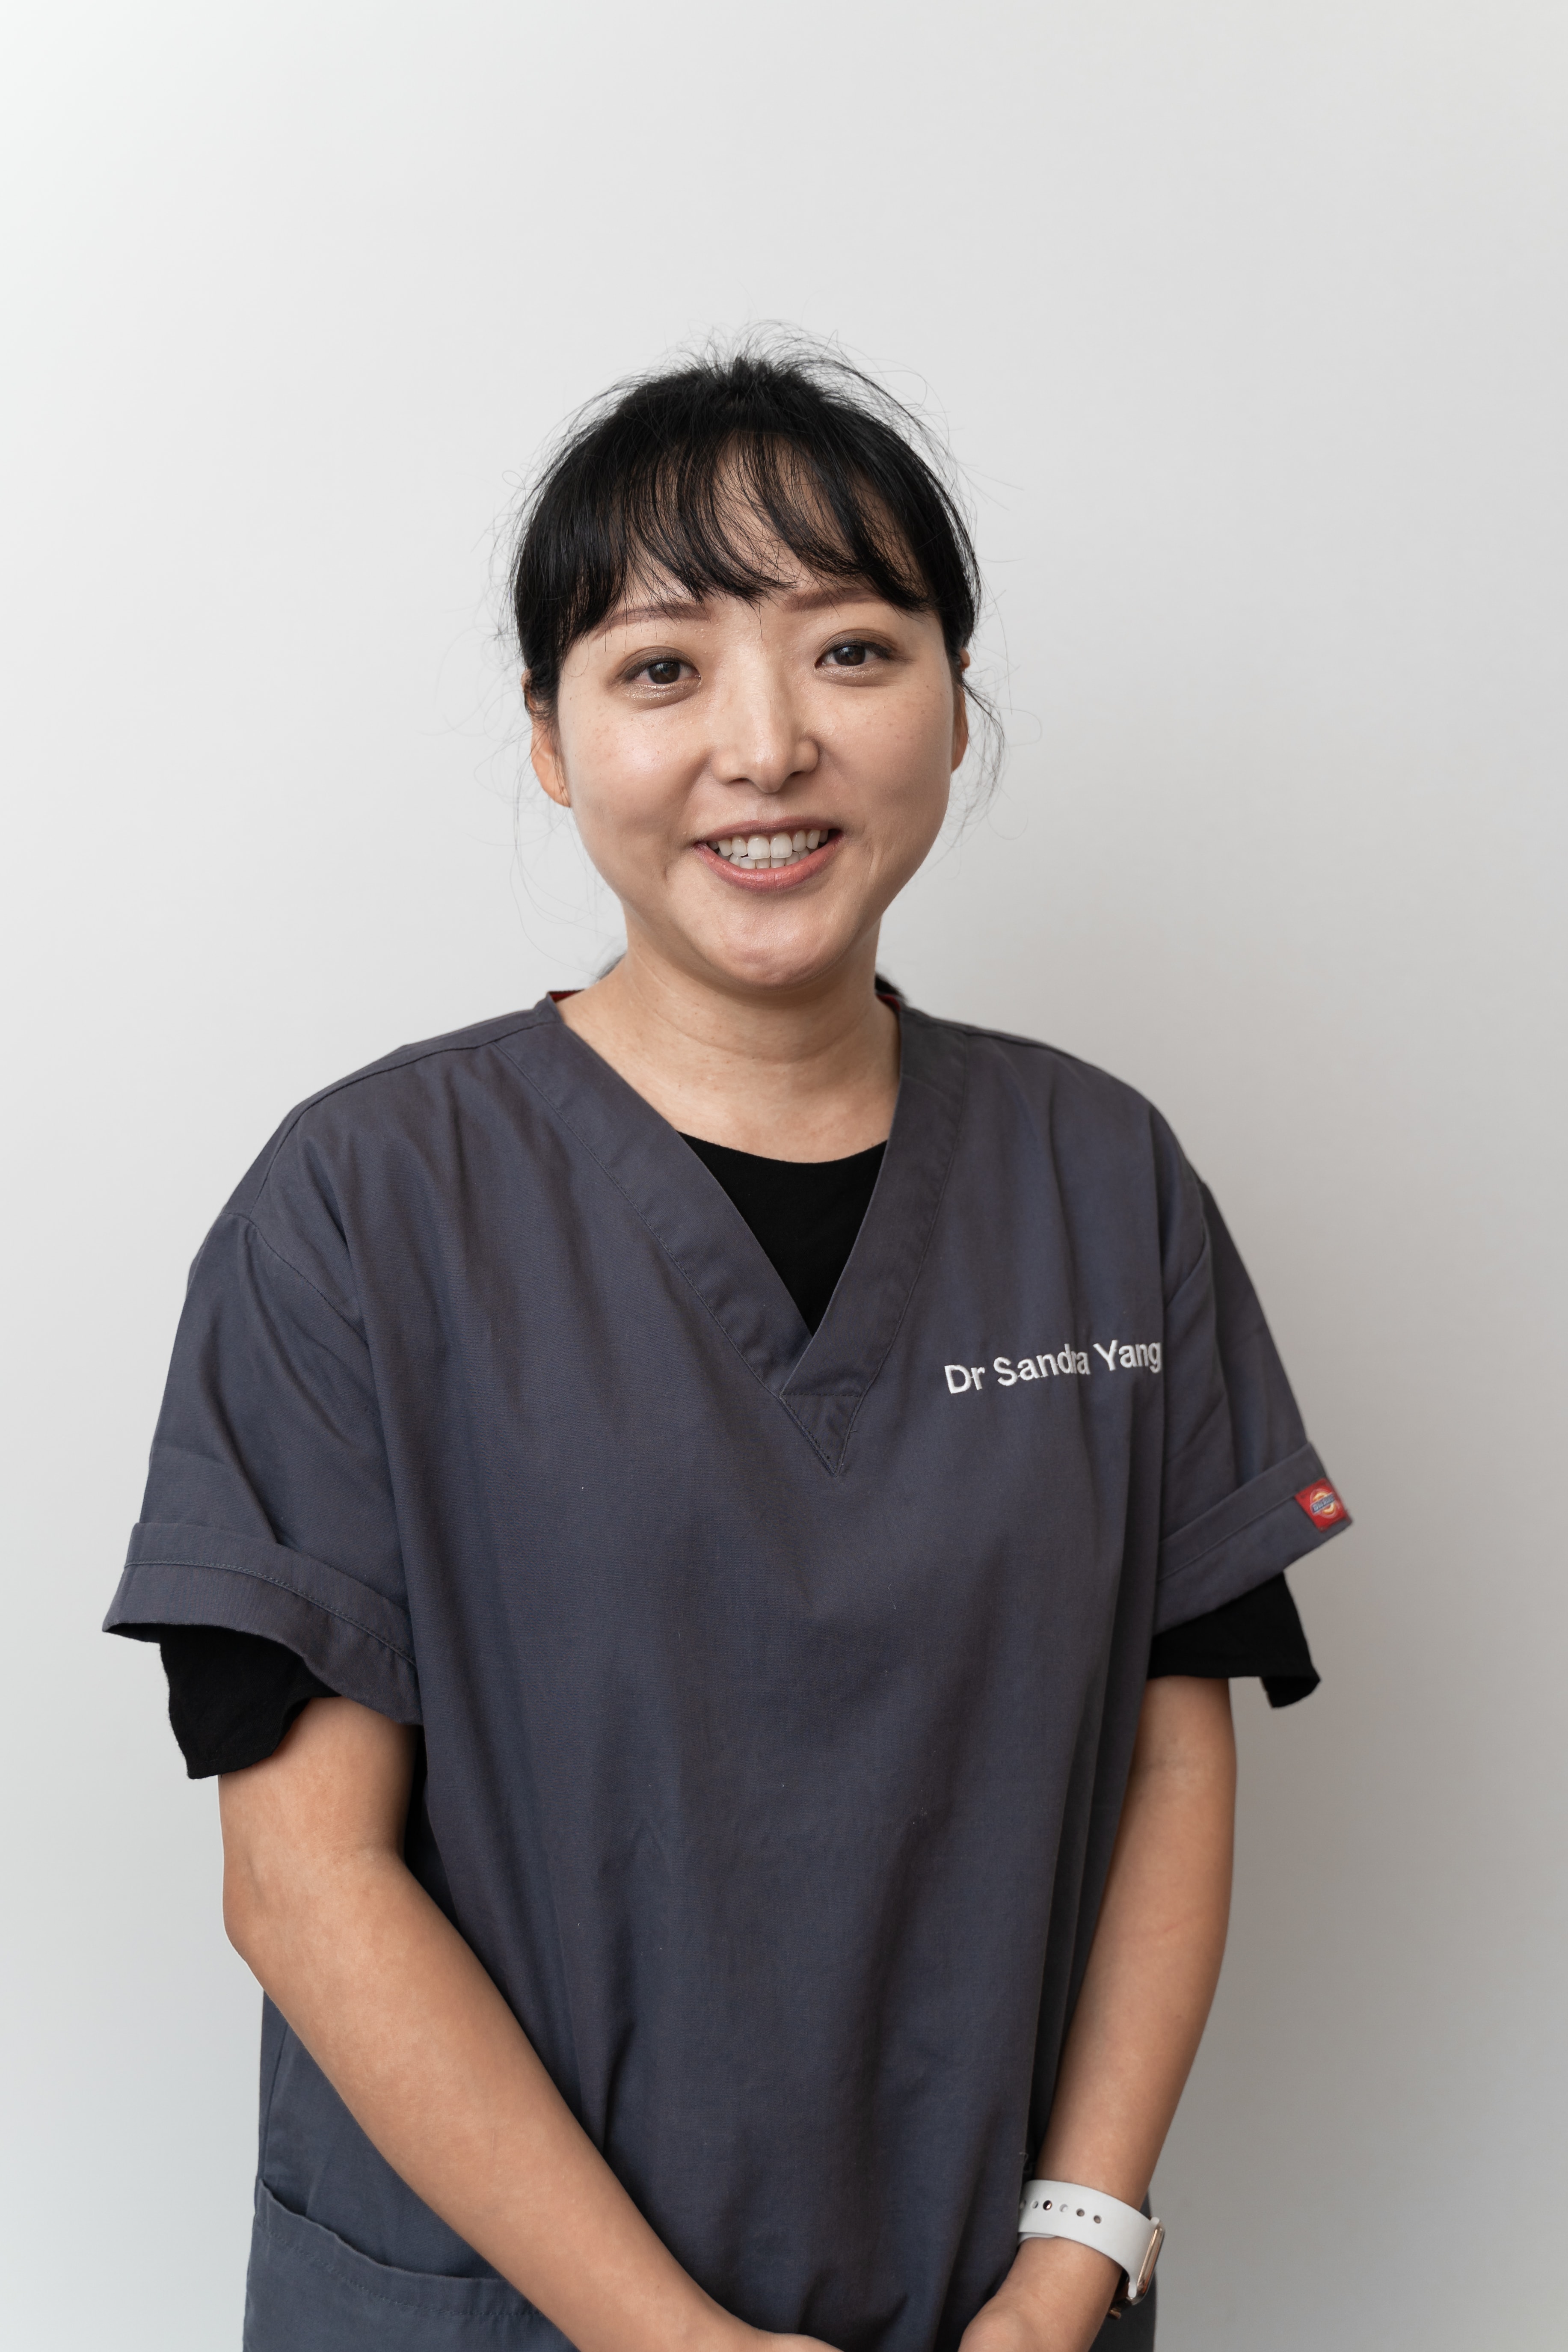 dentist Dr Sandra Yang portrait 